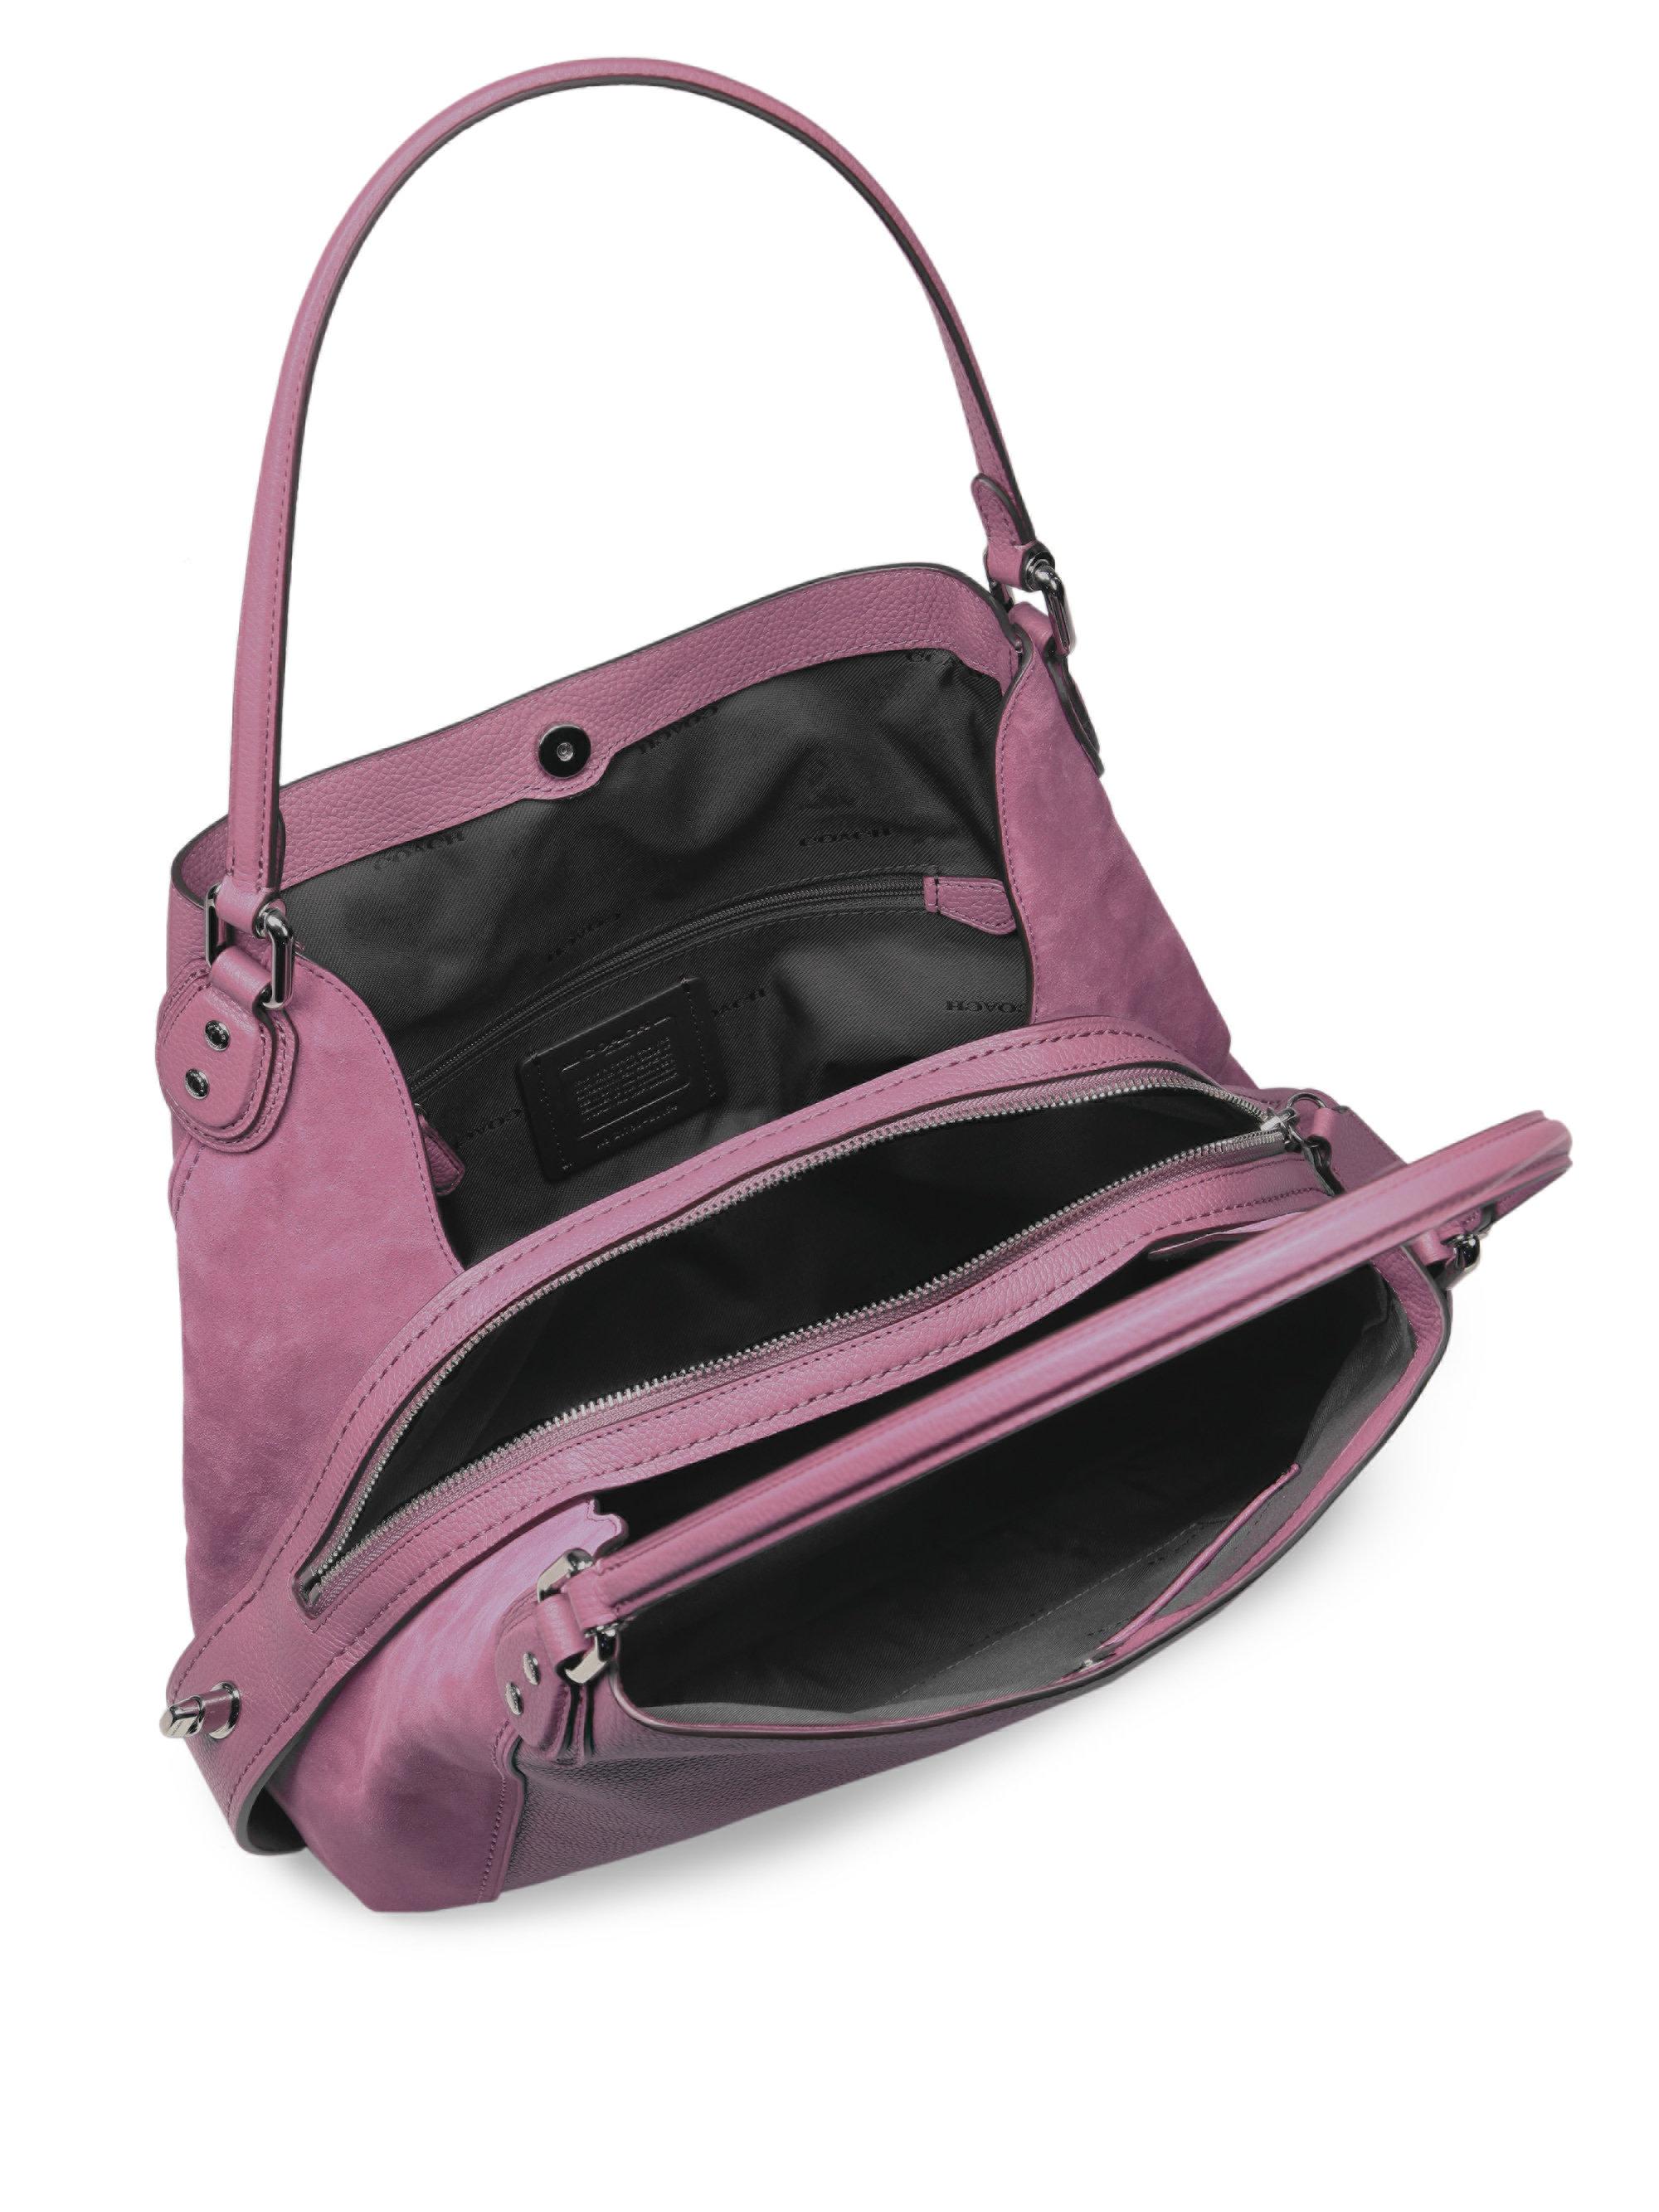 COACH Edie Leather Shoulder Bag in Pink - Lyst